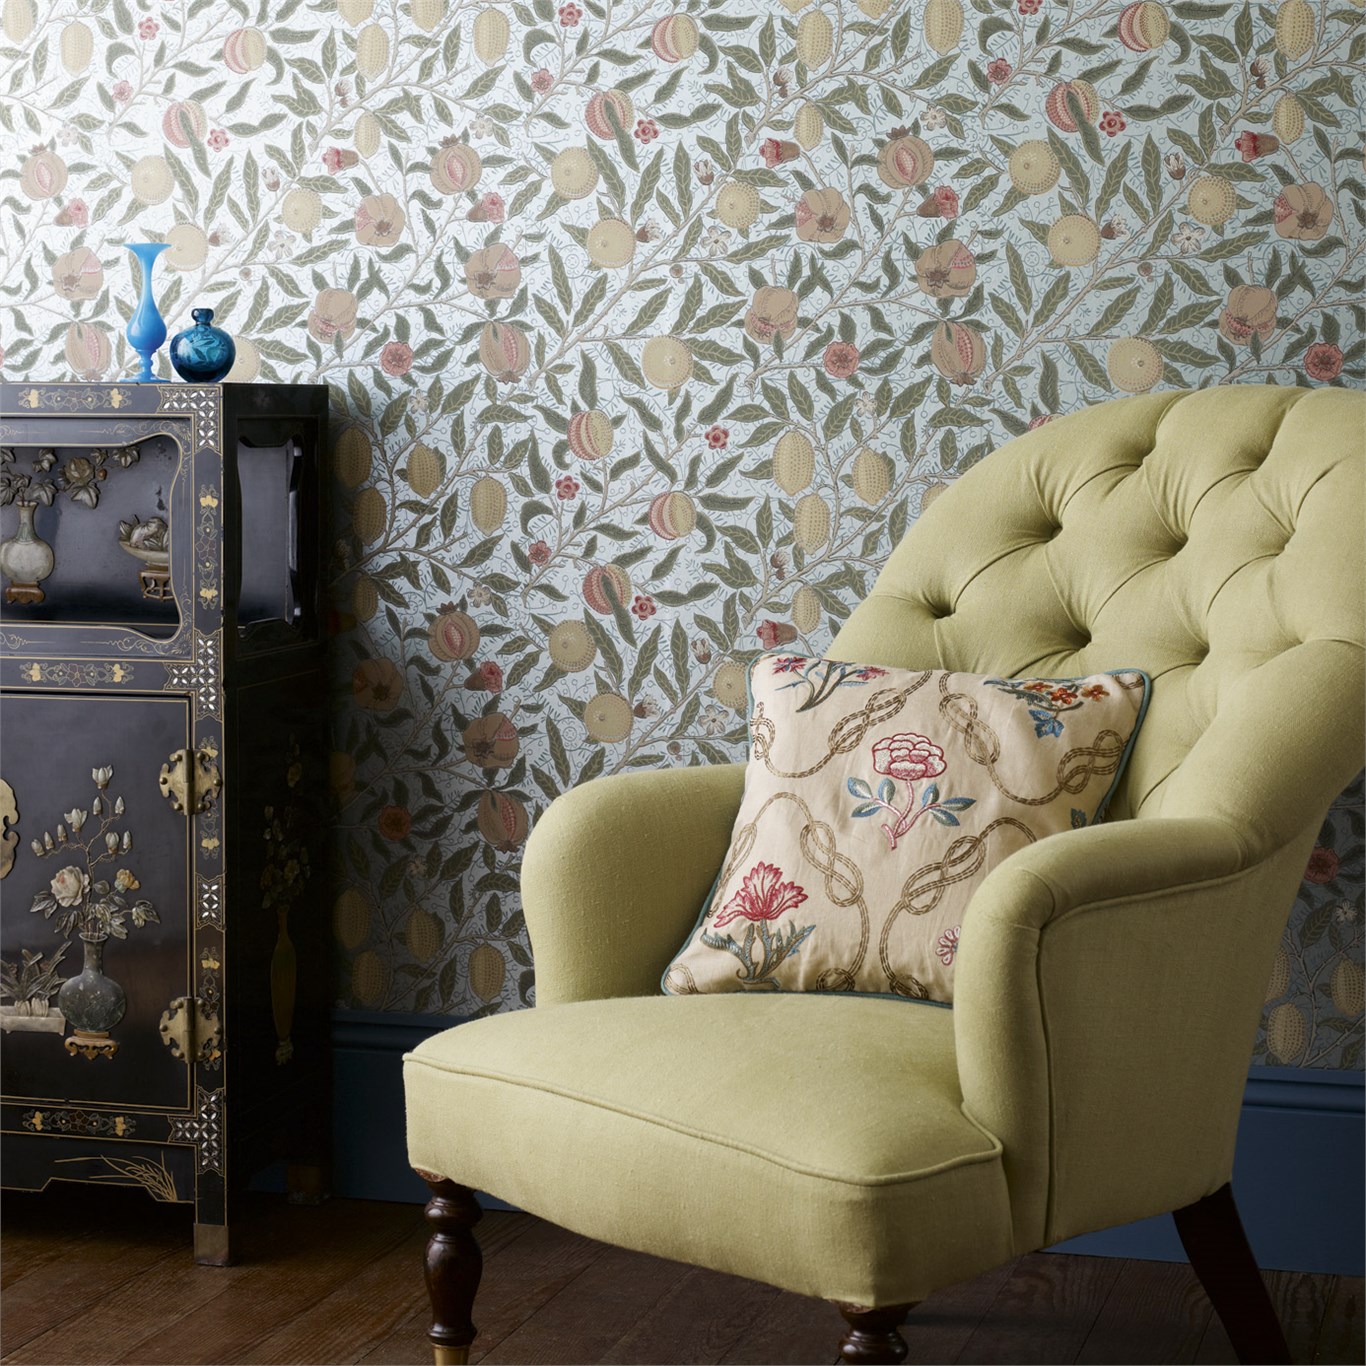 fruit wallpaper,furniture,wallpaper,chair,wall,club chair